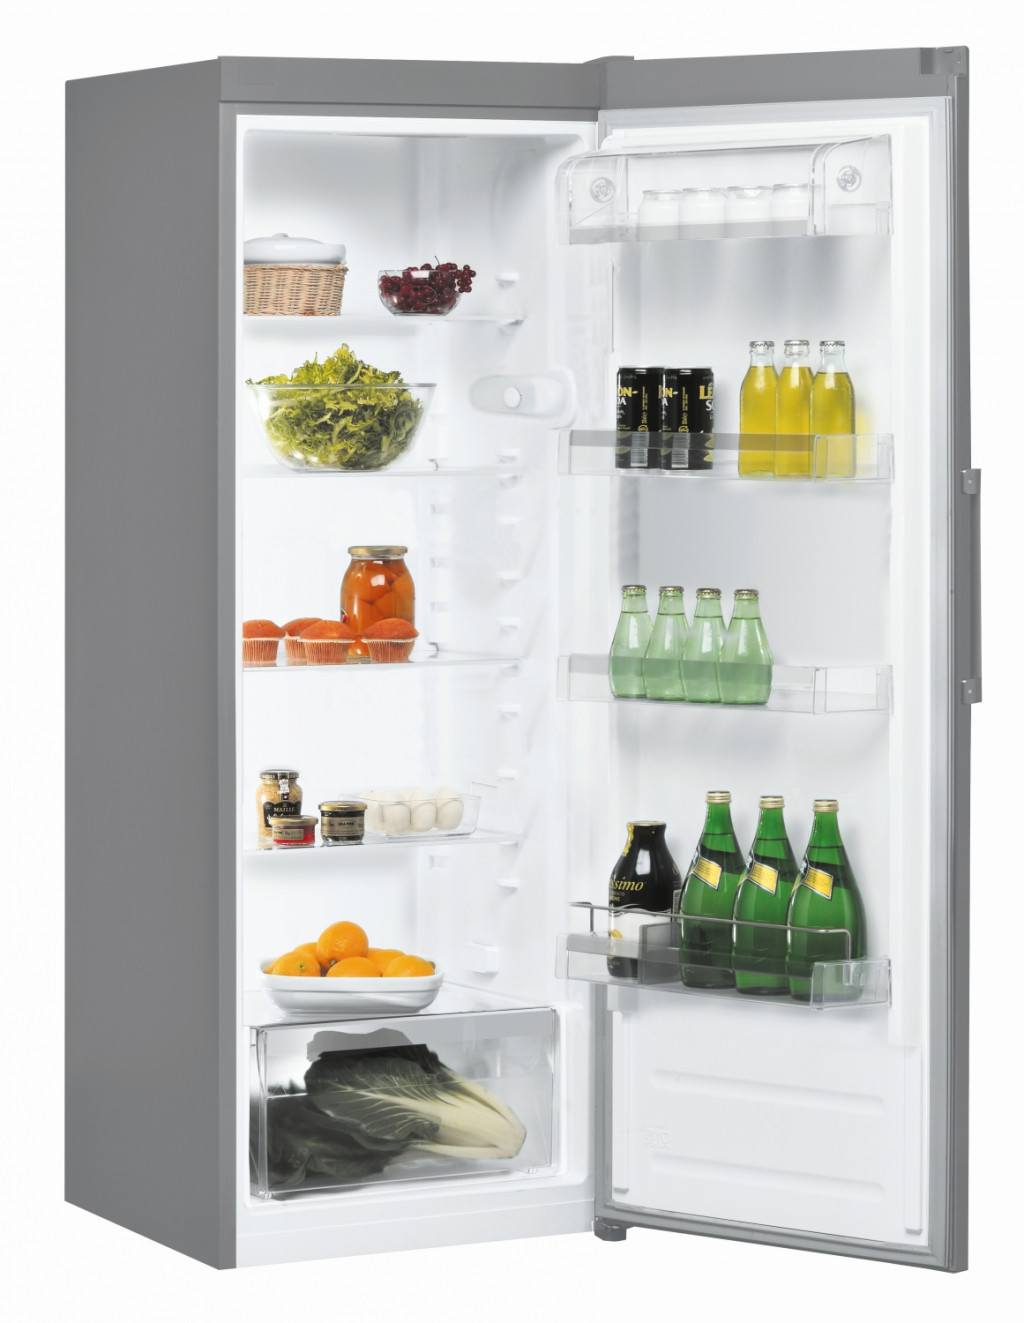 INDESIT Refrigerator SI6 1 S Energy efficiency class F Free standing Larder Height 167 cm Fridge net capacity 323 L 40 dB Silver